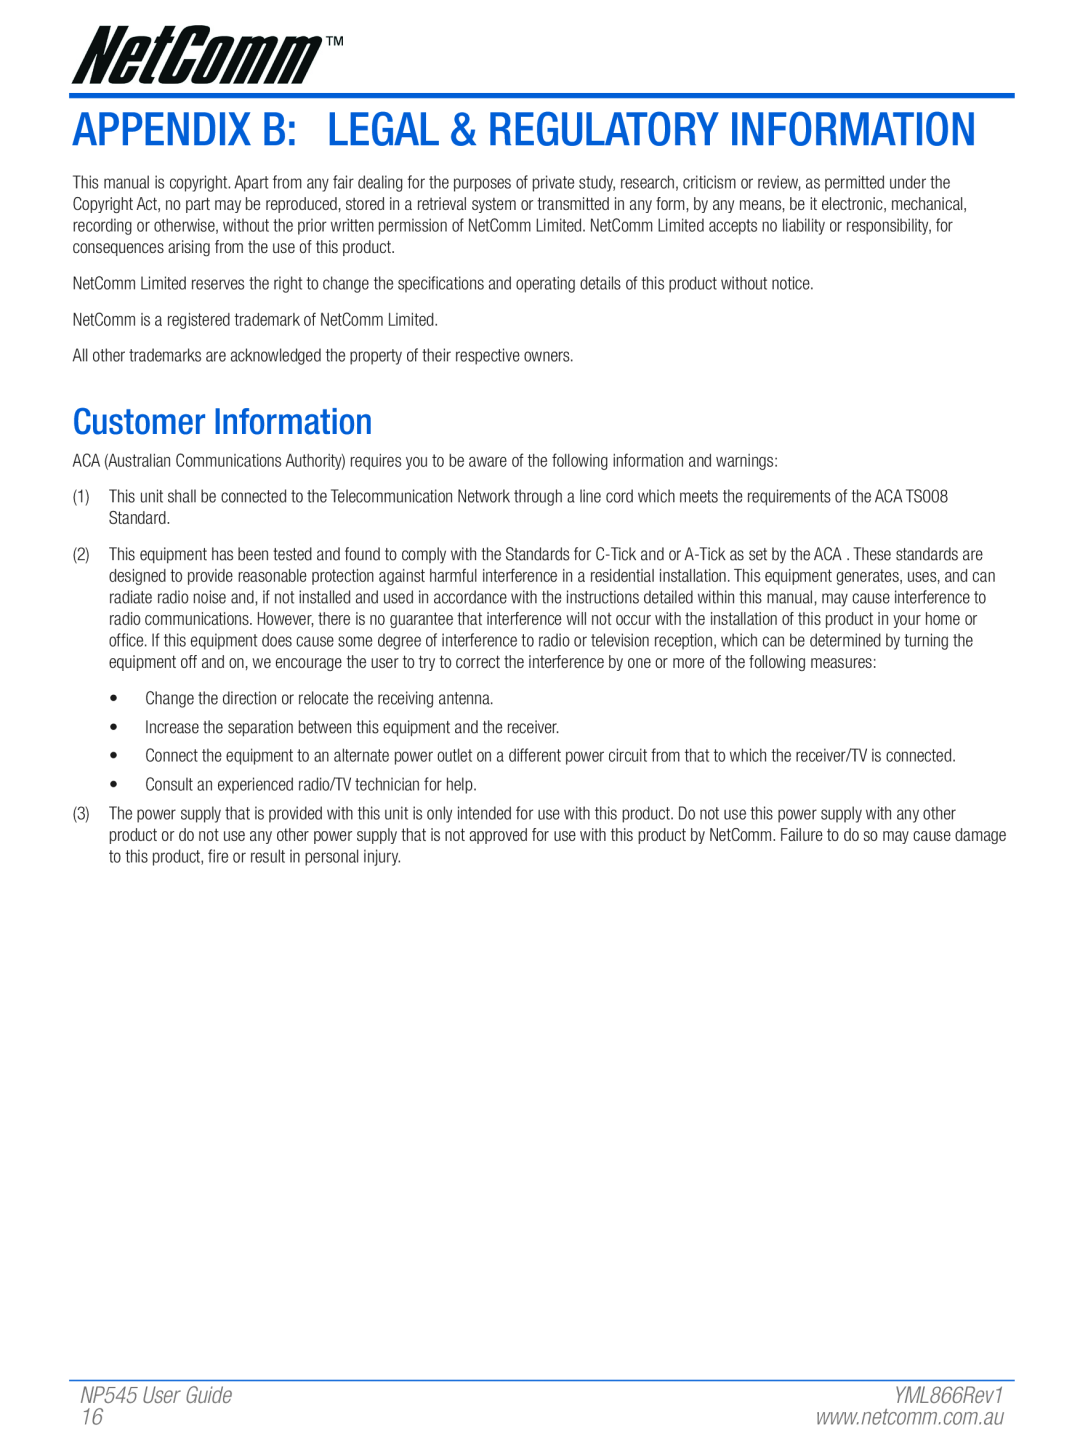 NetComm manual Appendix B Legal & Regulatory Information, Customer Information, NP545 User Guide, YML866Rev1 